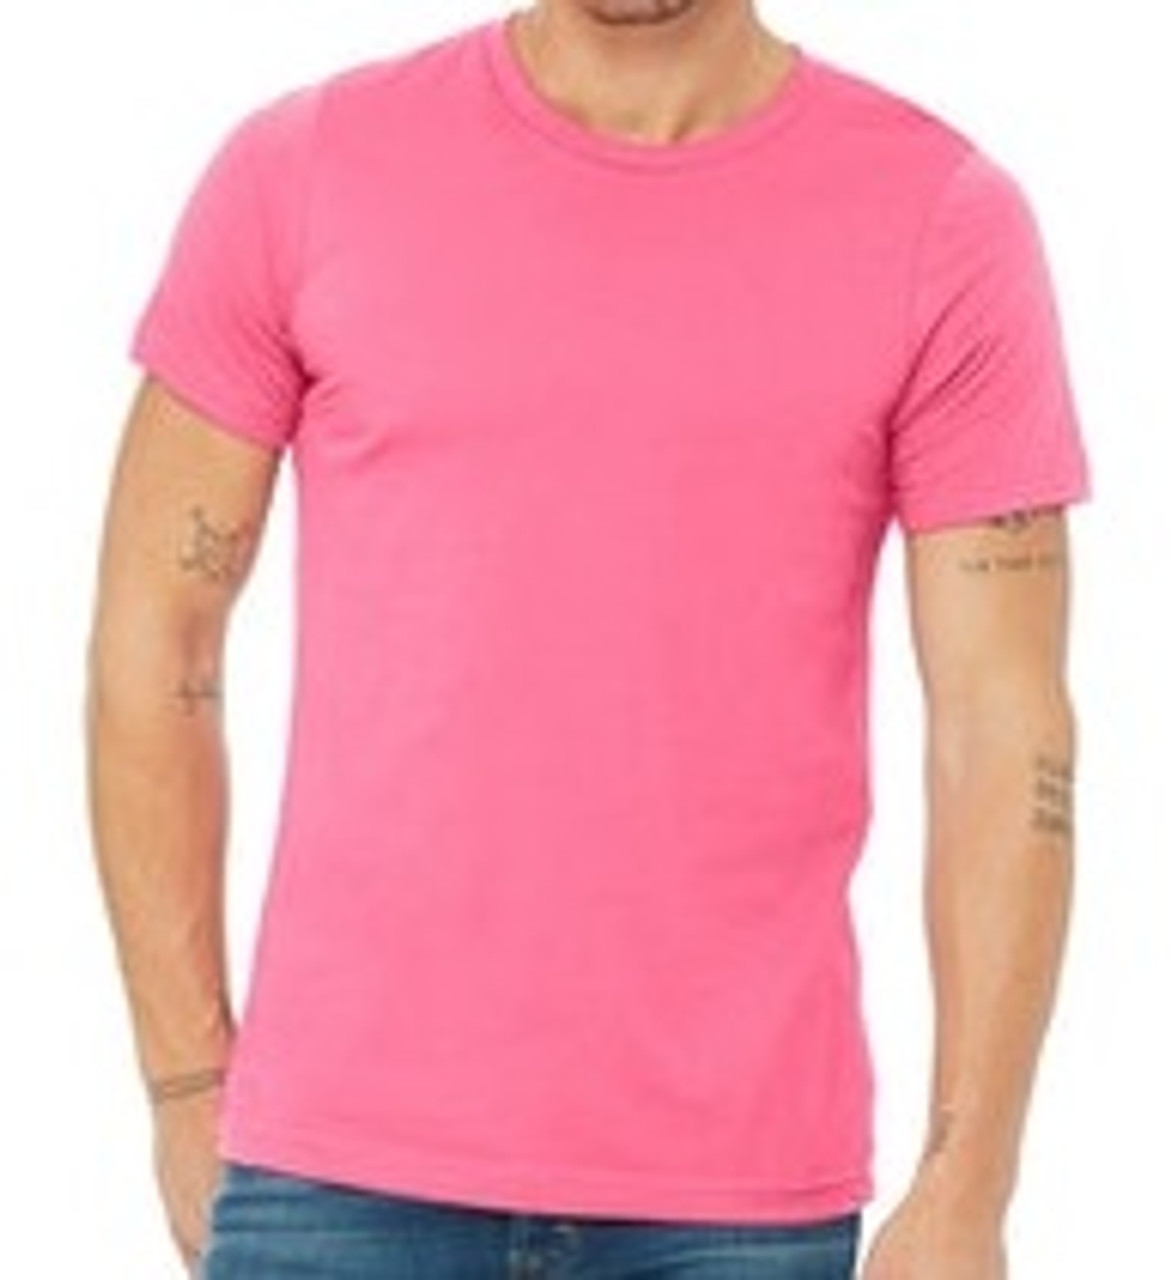 Medium - Adult - Charity Pink - Bella Canvas - Custom T-shirt